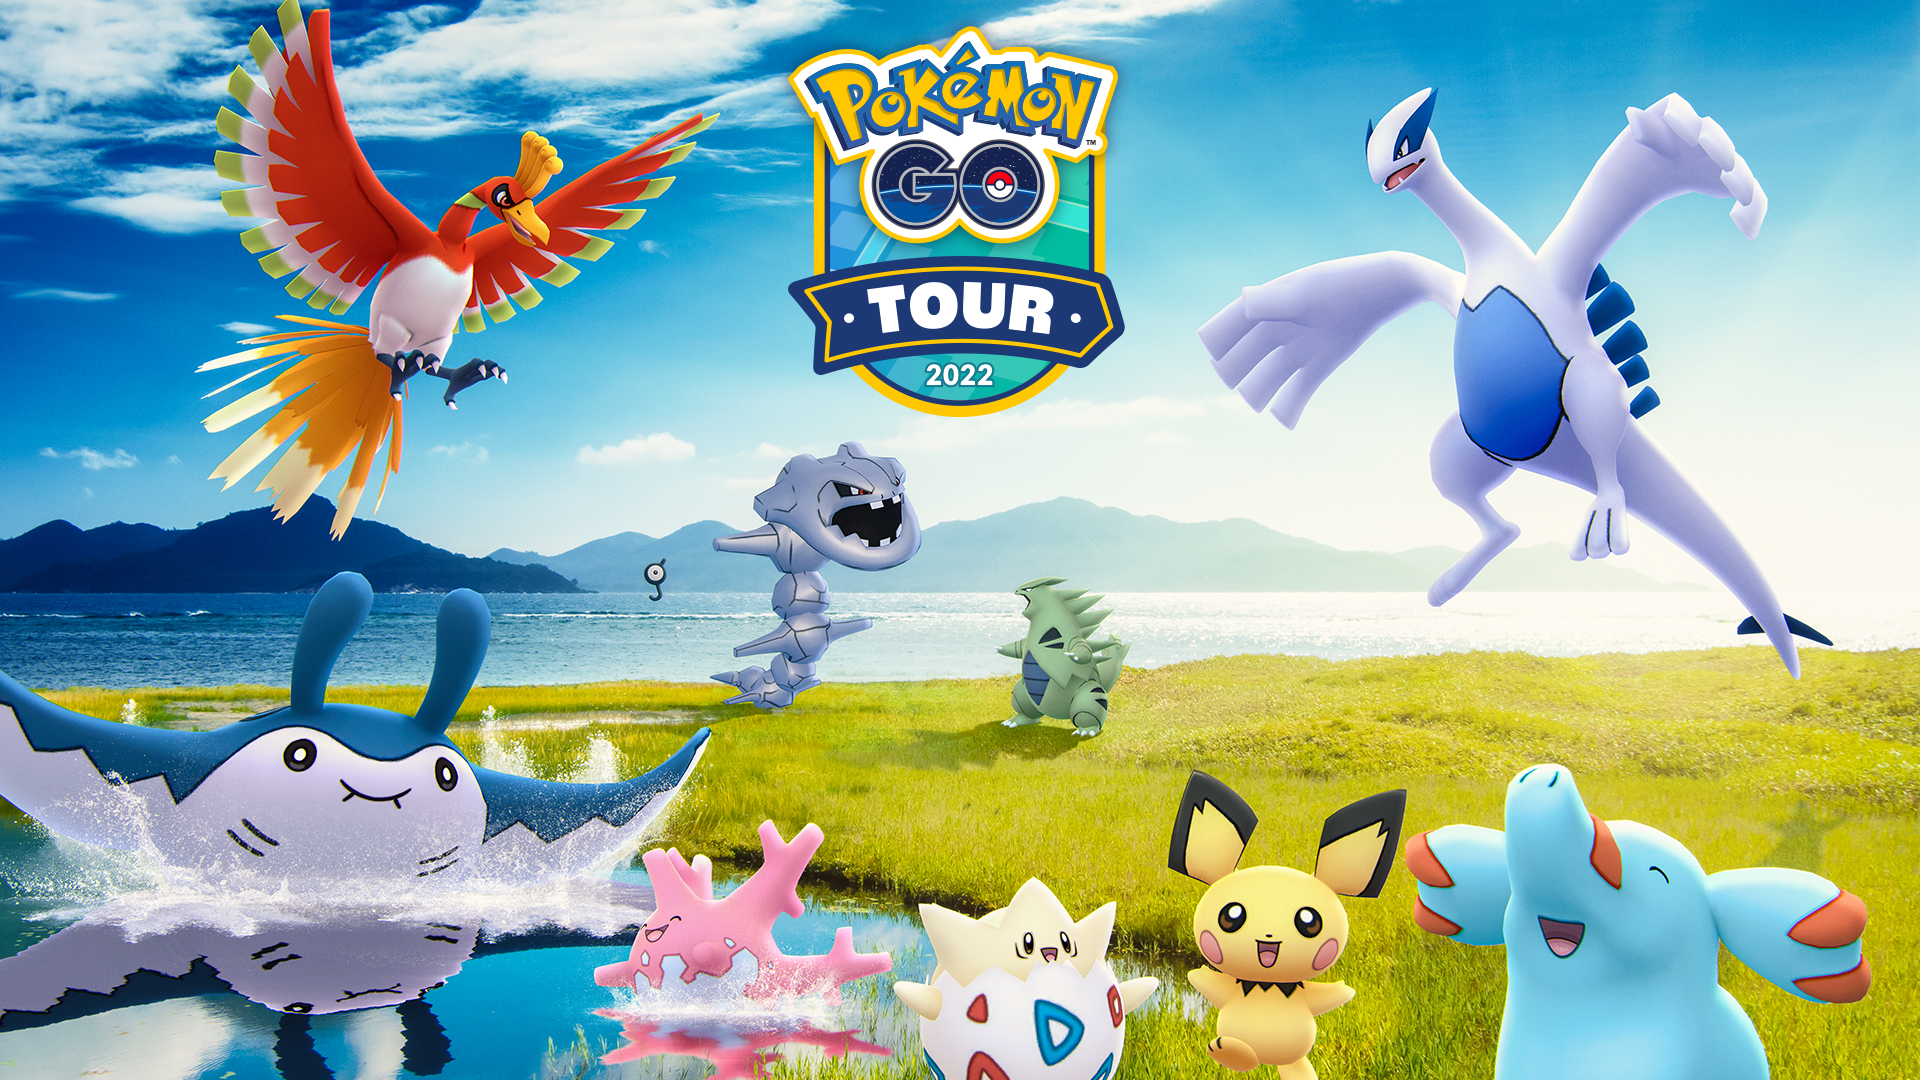 Pokémon Go Tour Johto 2022 event times schedule rewards and free activities explained